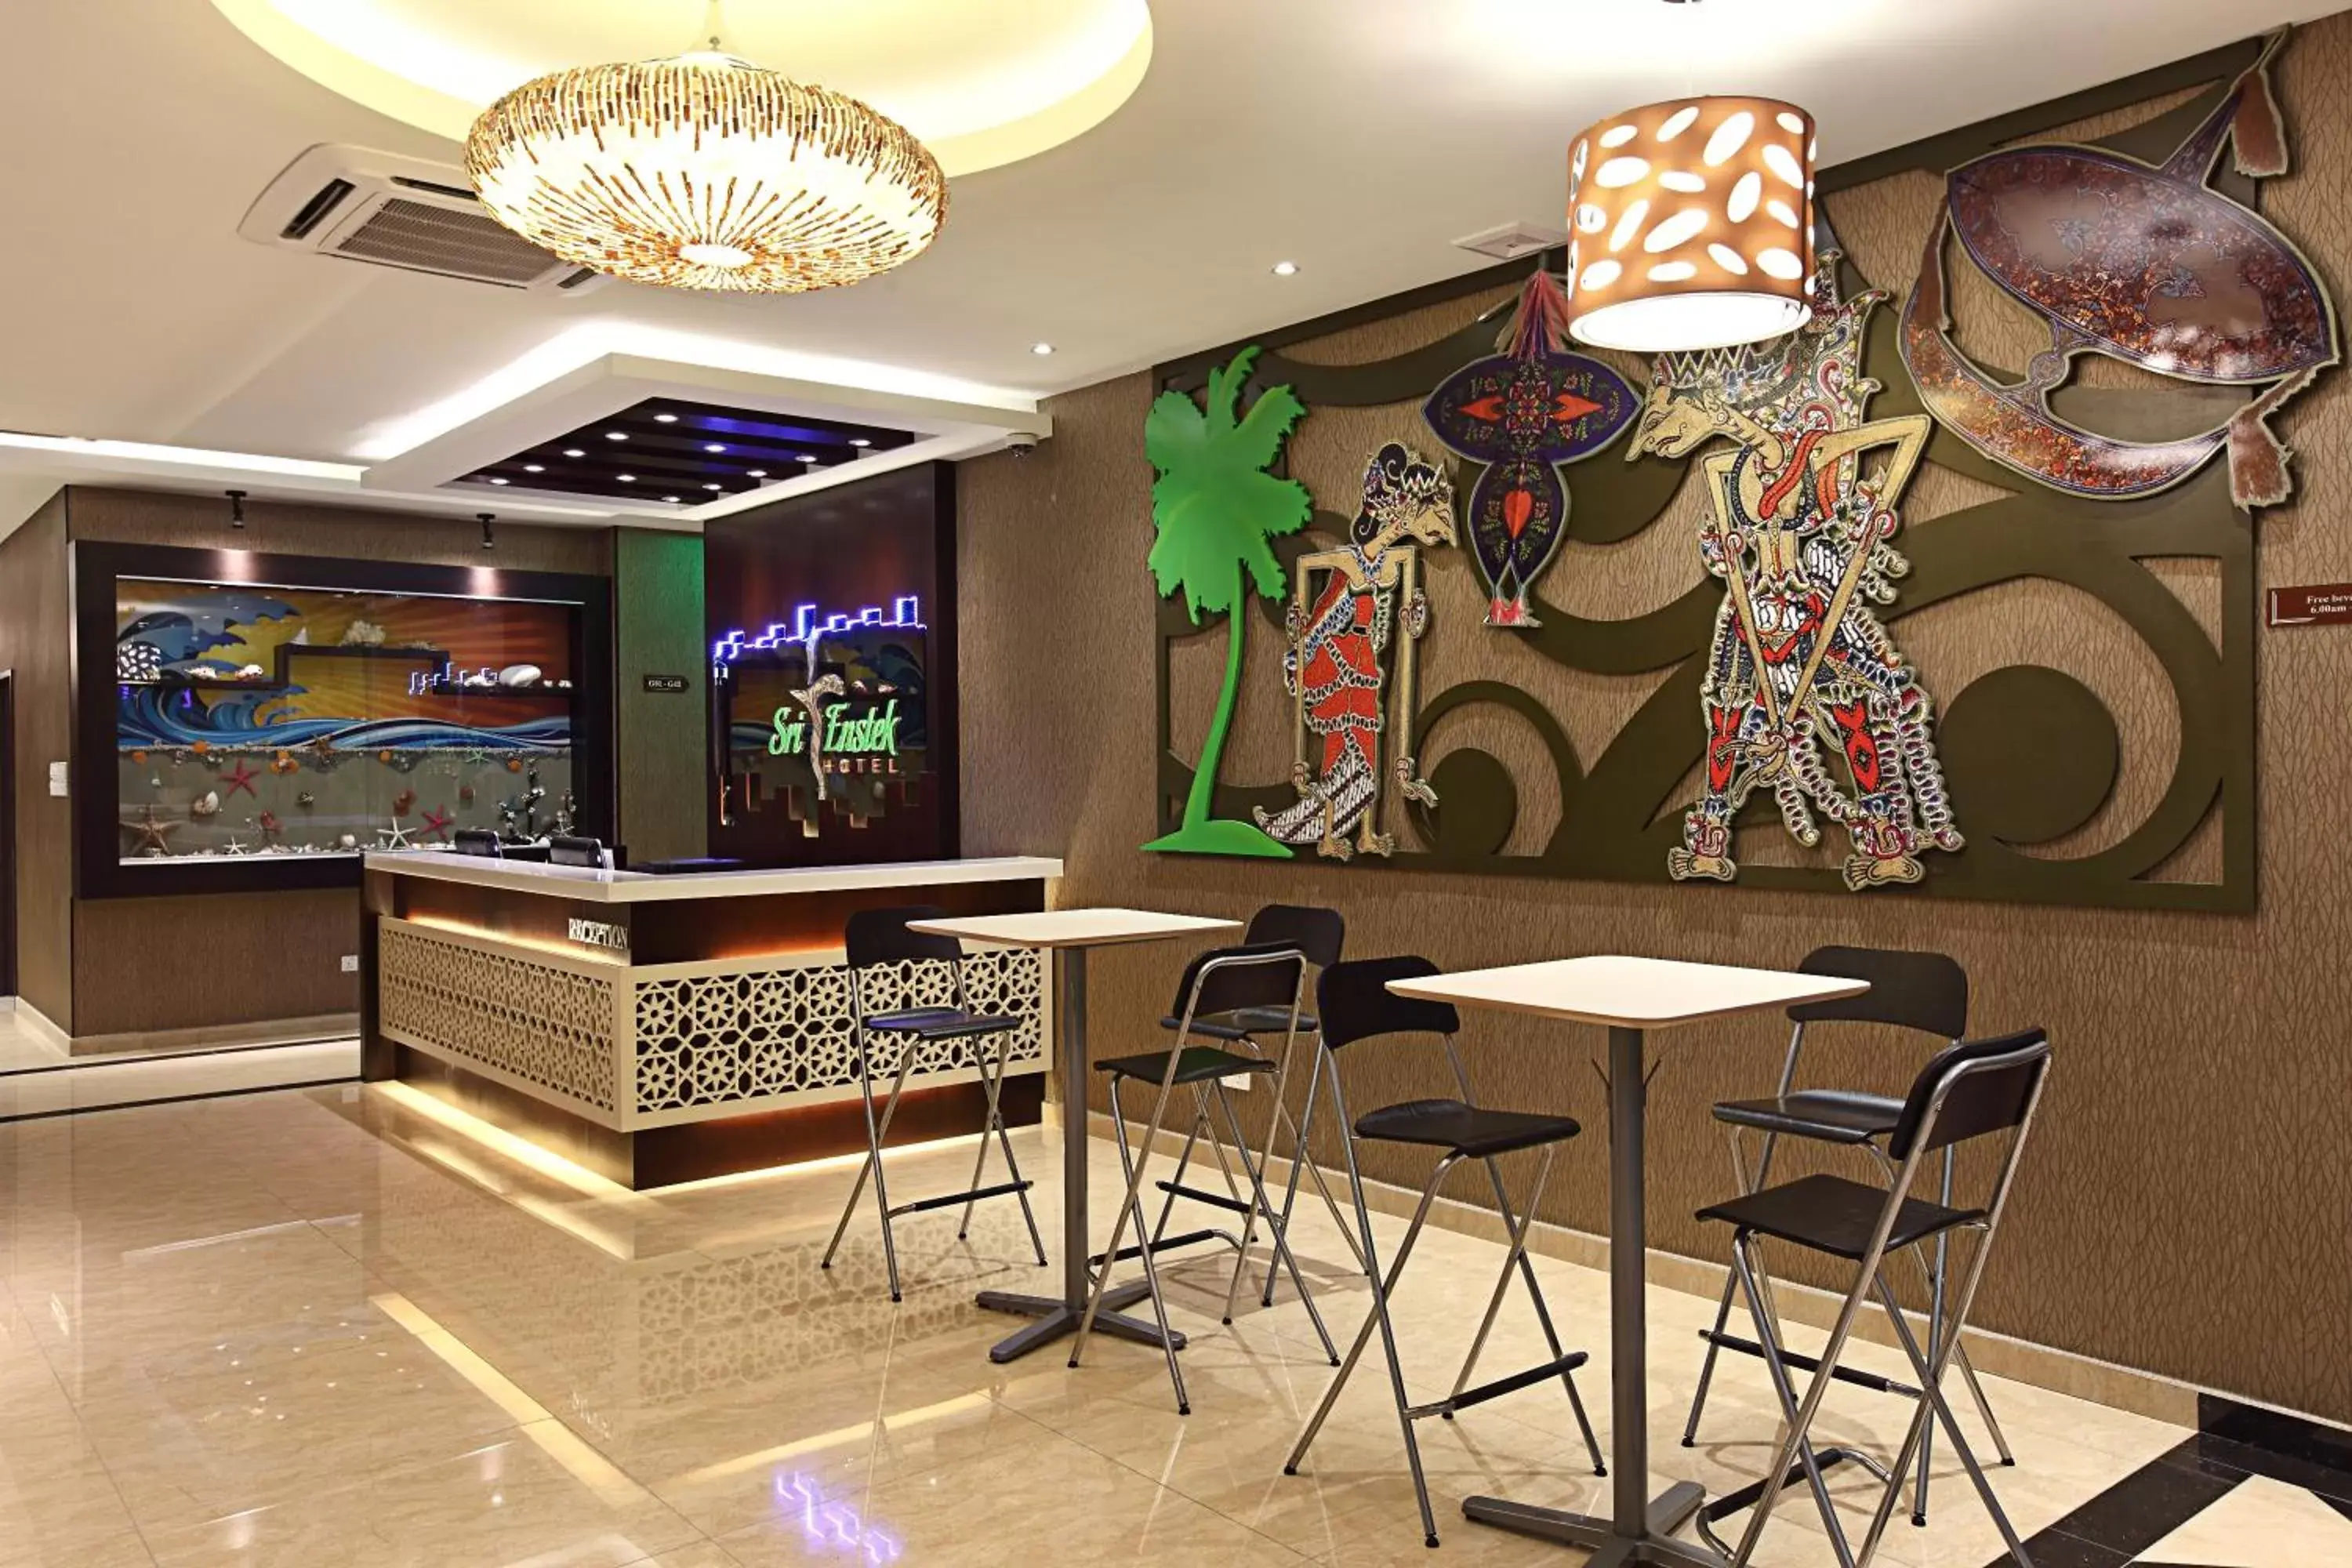 Lobby or reception in Sri Enstek Hotel KLIA, KLIA 2 & F1